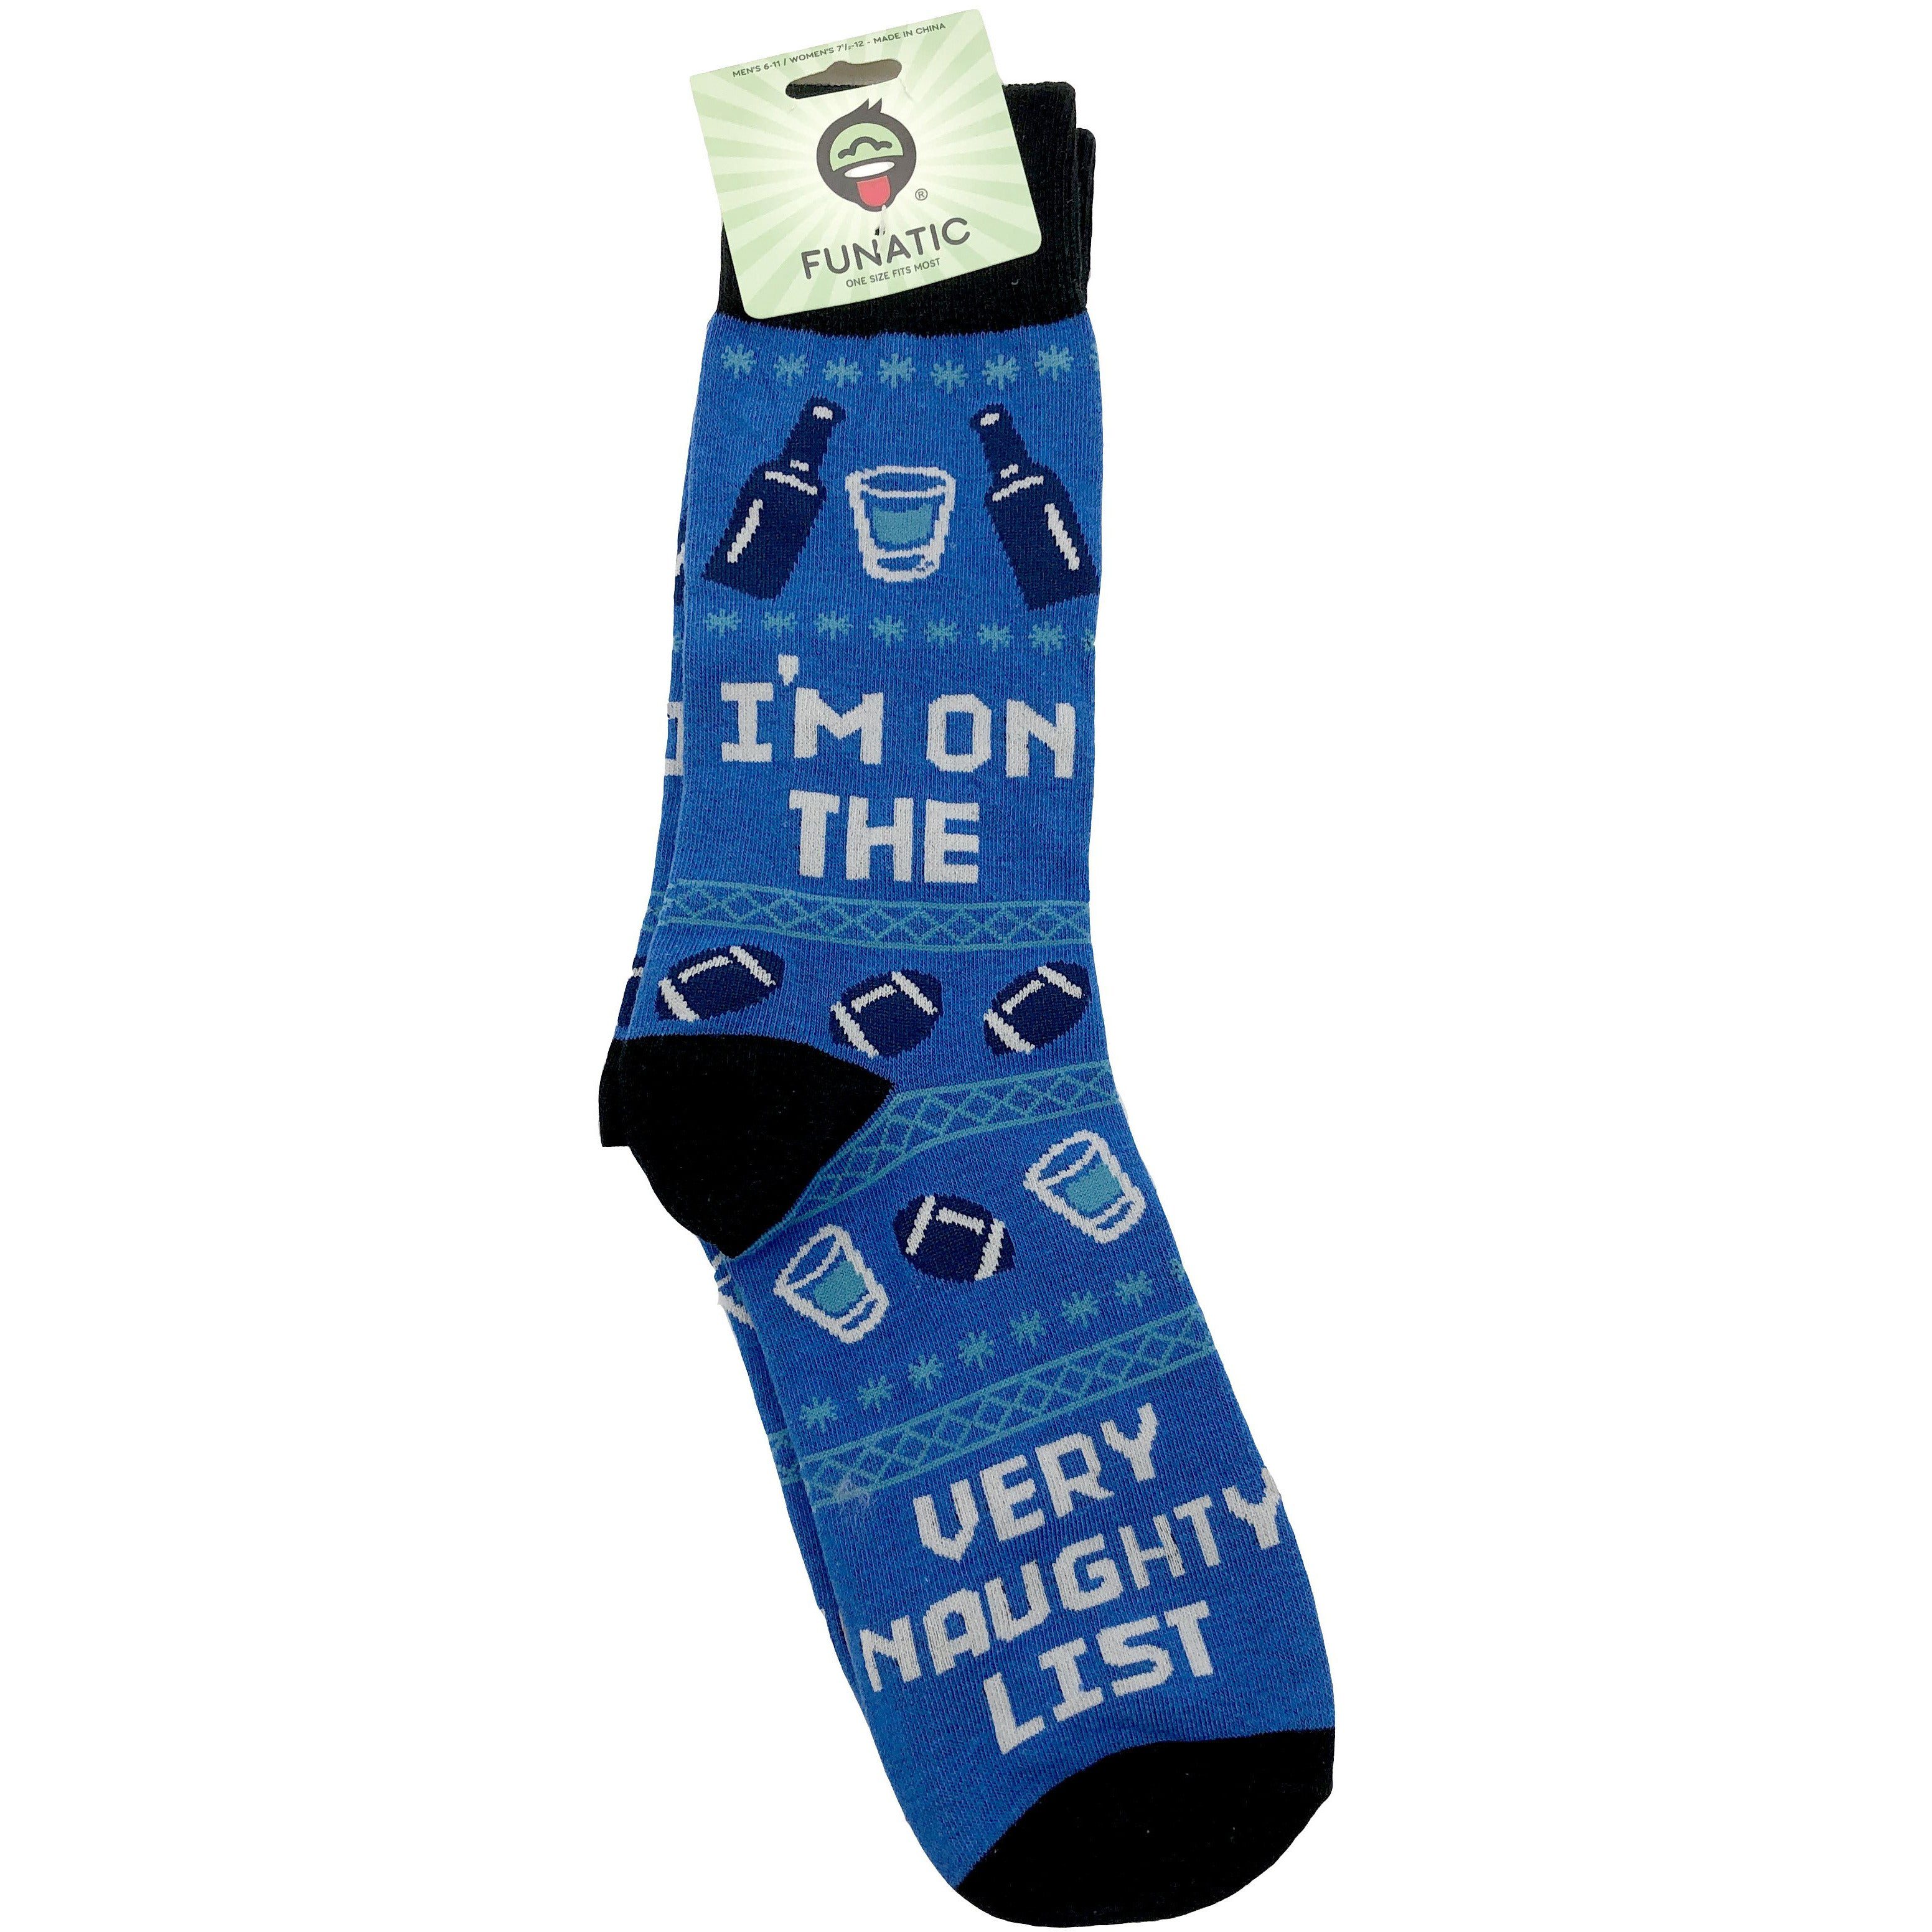 Funatic Fun Novelty Socks For Men and Women: Mens 6-11/ Women's 7.5-12